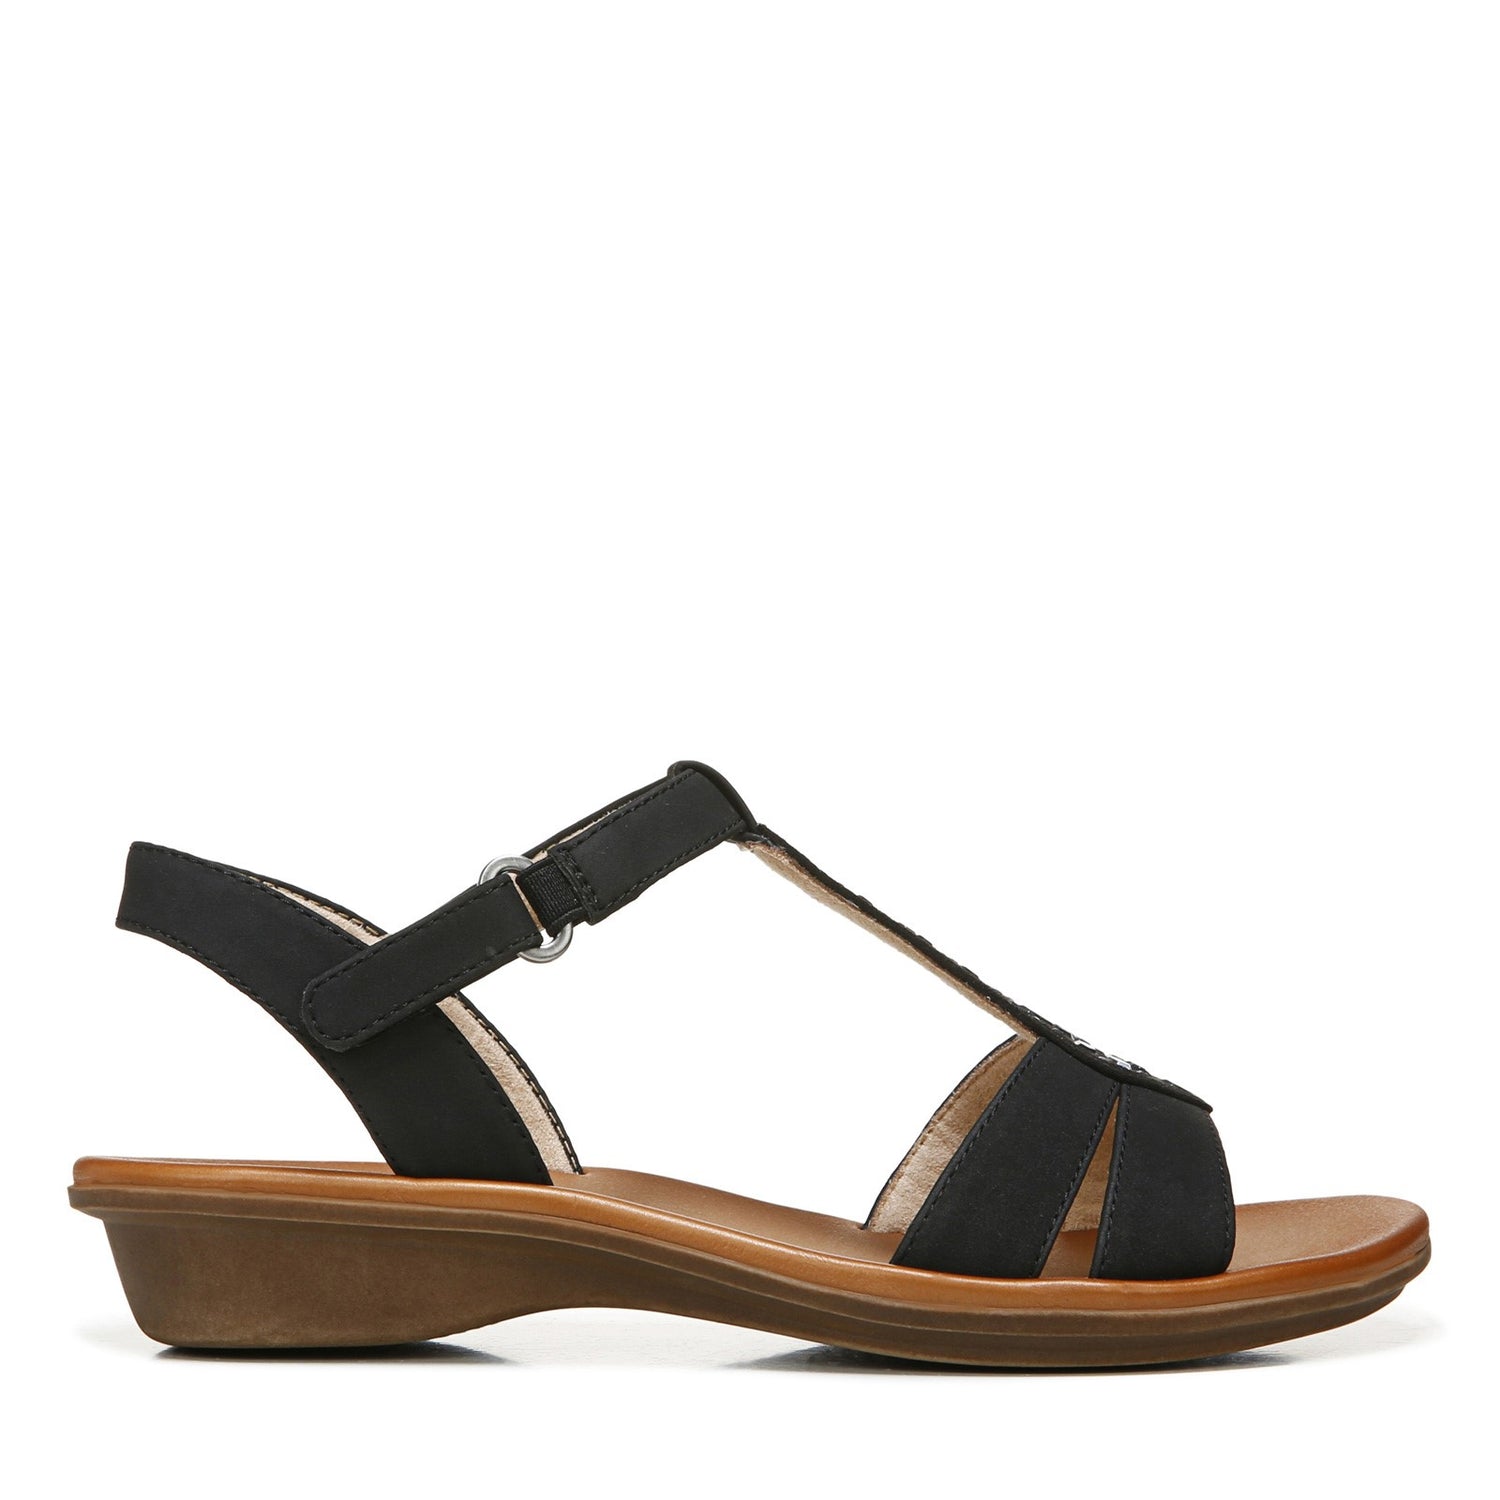 Peltz Shoes  Women's Soul Naturalizer Summer Sandal BLACK I0764M0001